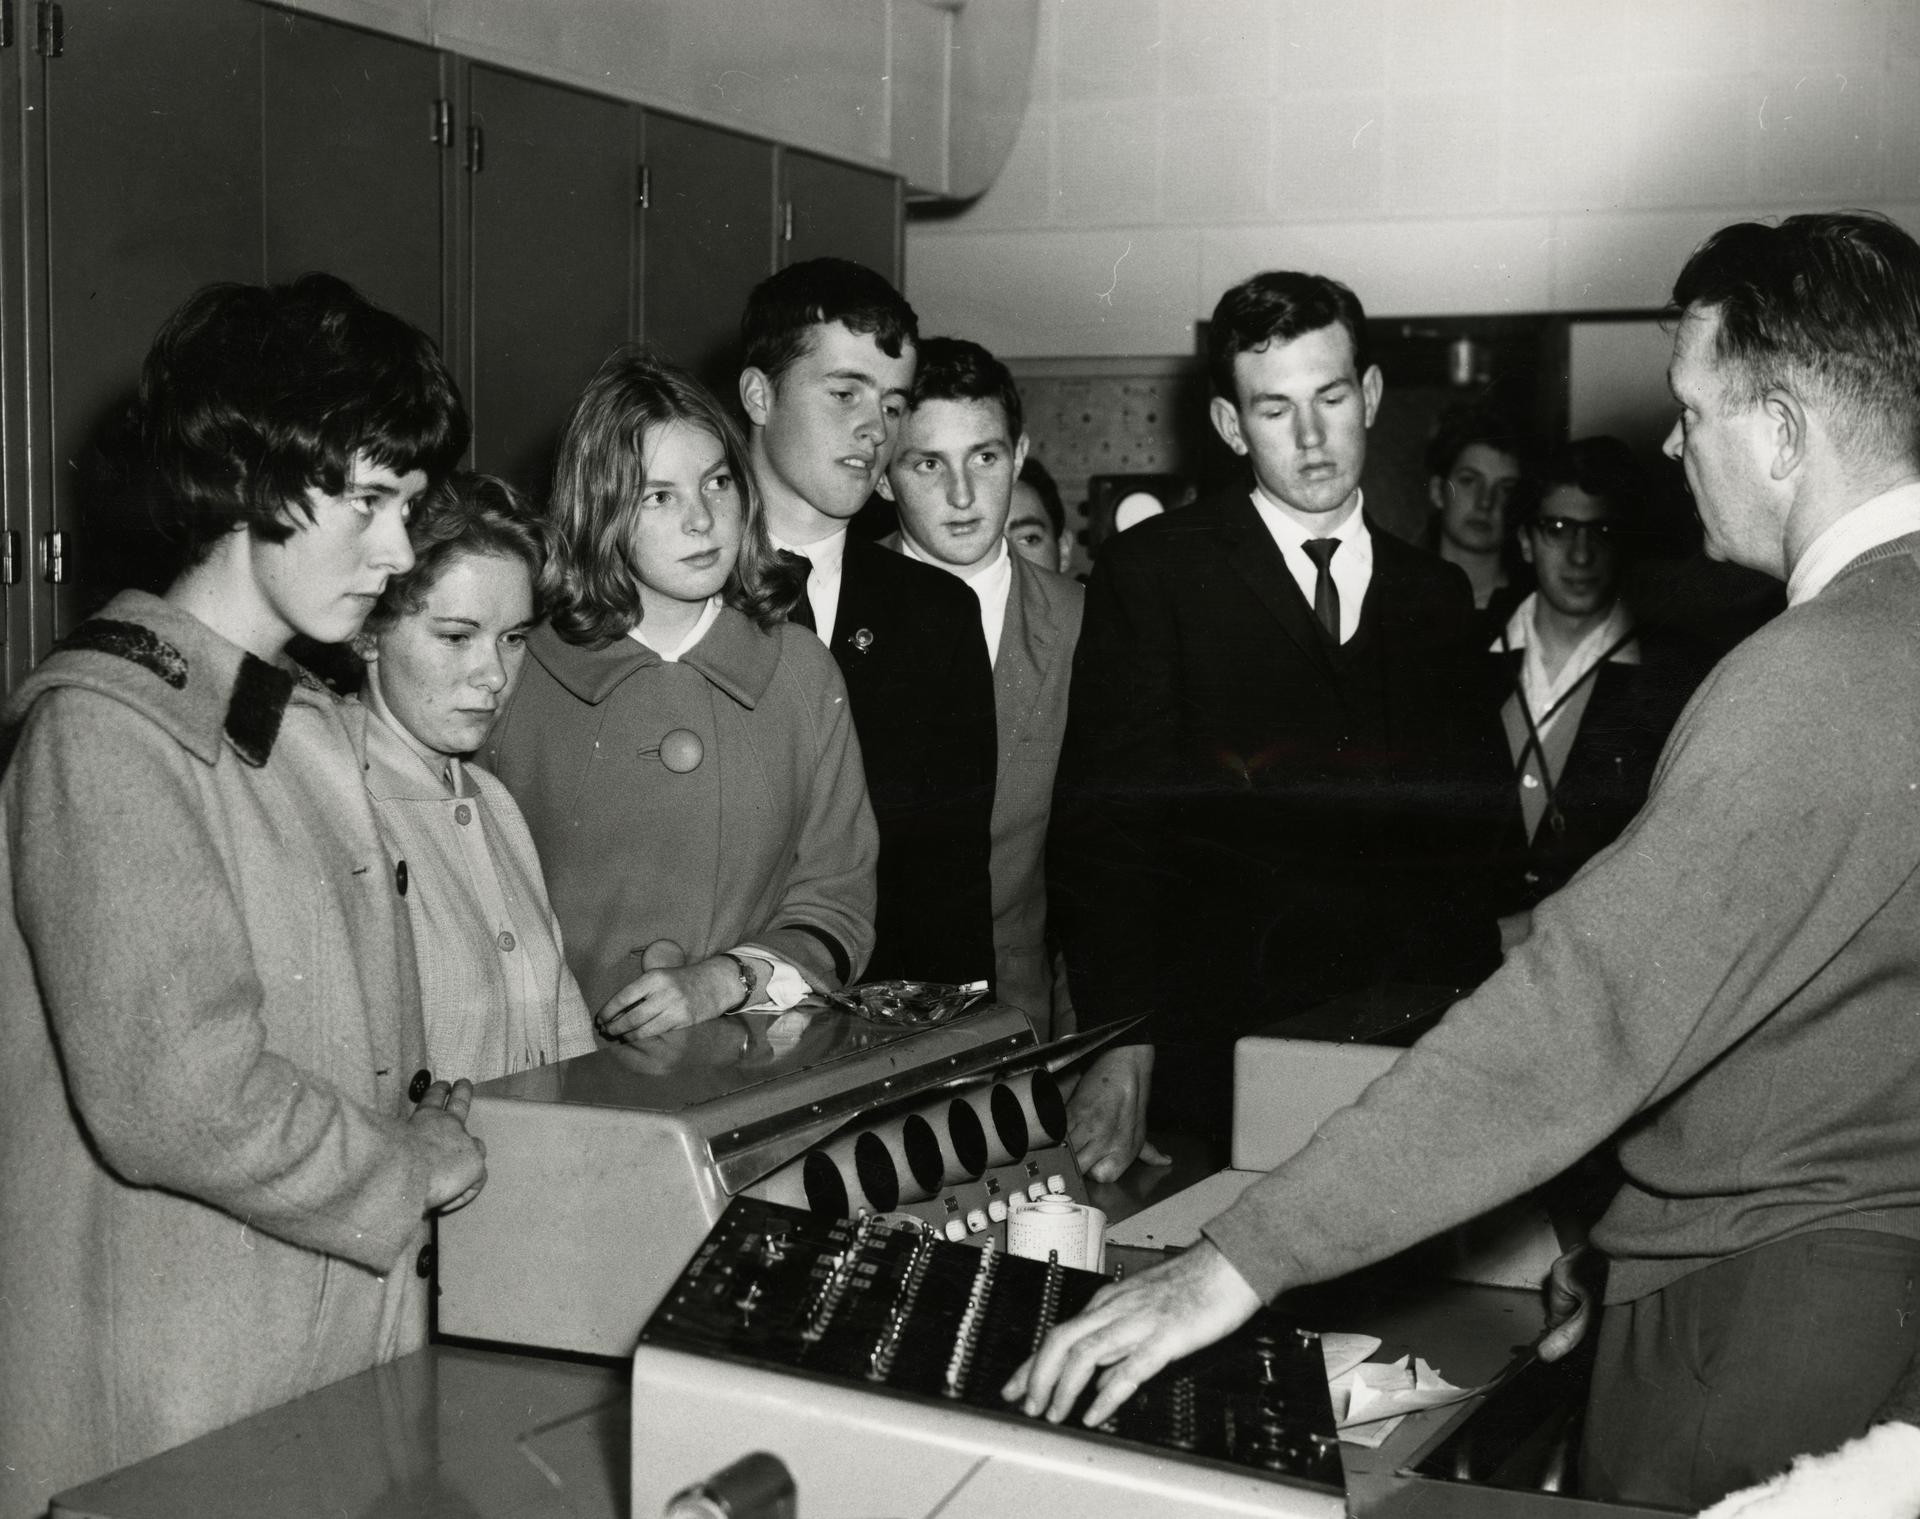 Secondary School students examine computer equipment, Open day 1963